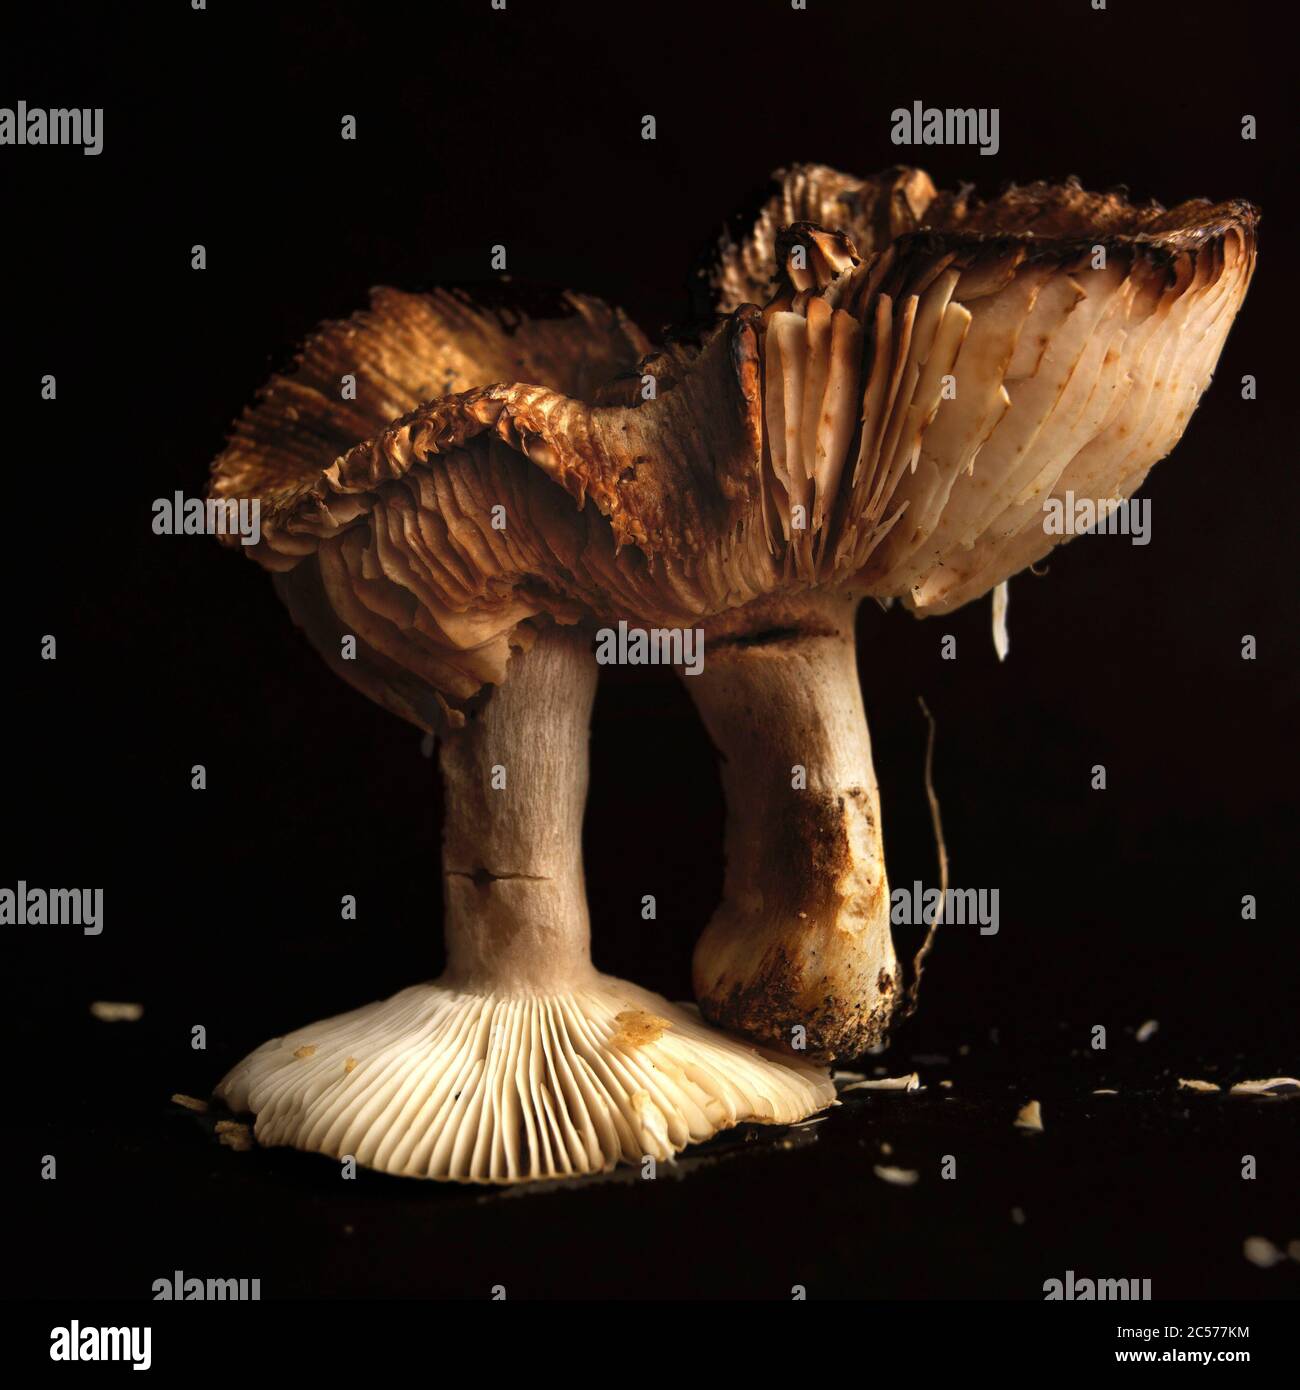 Mushrooms on a black background Stock Photo